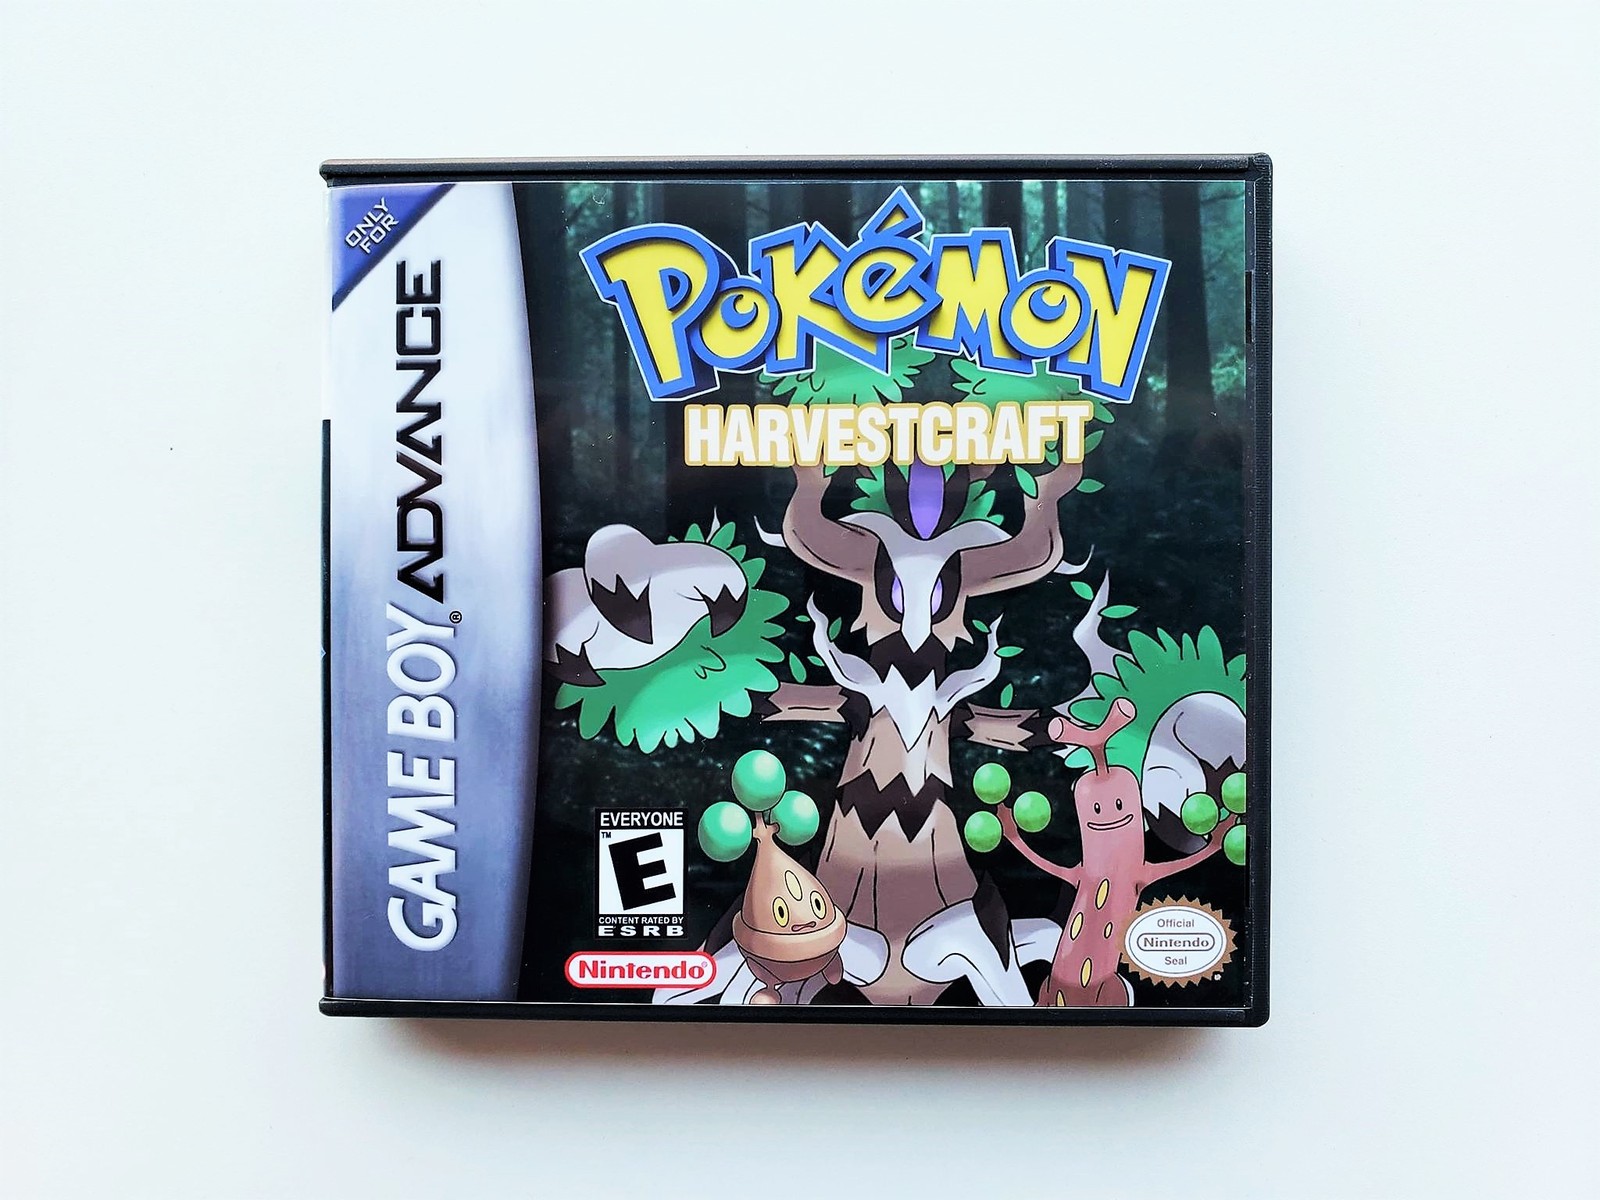 Pokemon Harvest Craft Game / Case - Gameboy Advance (GBA) USA Seller